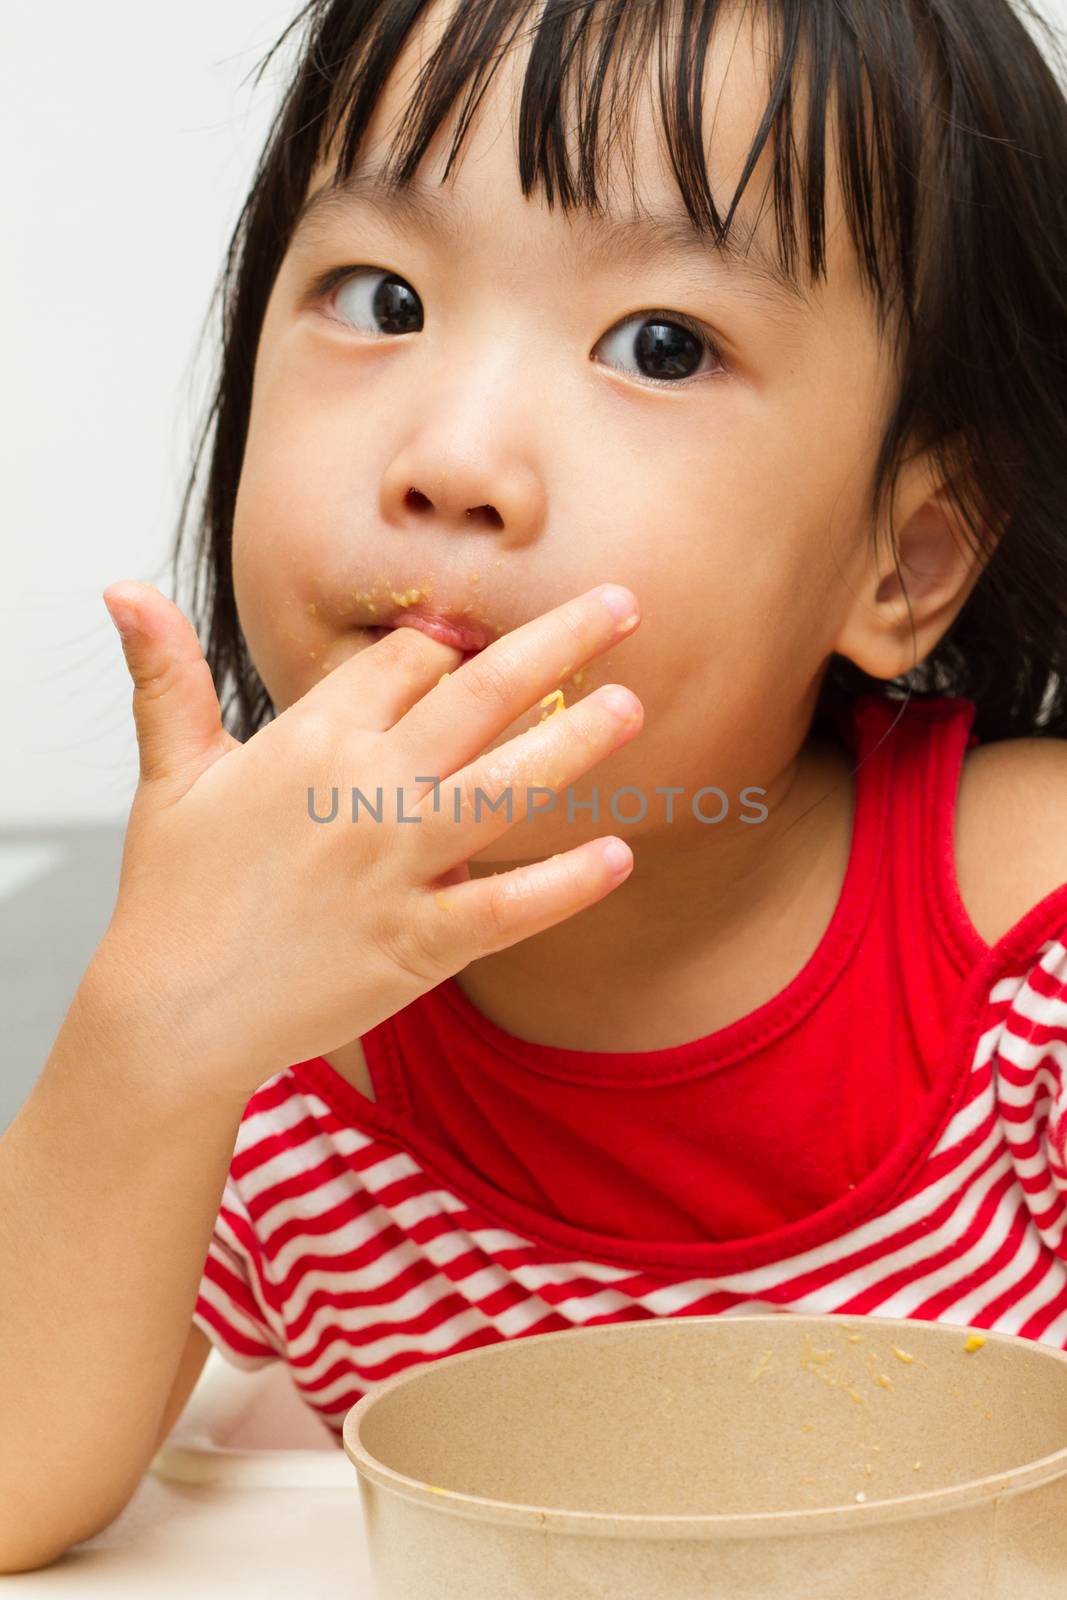 Asian Chinese little girl eating durian fruit